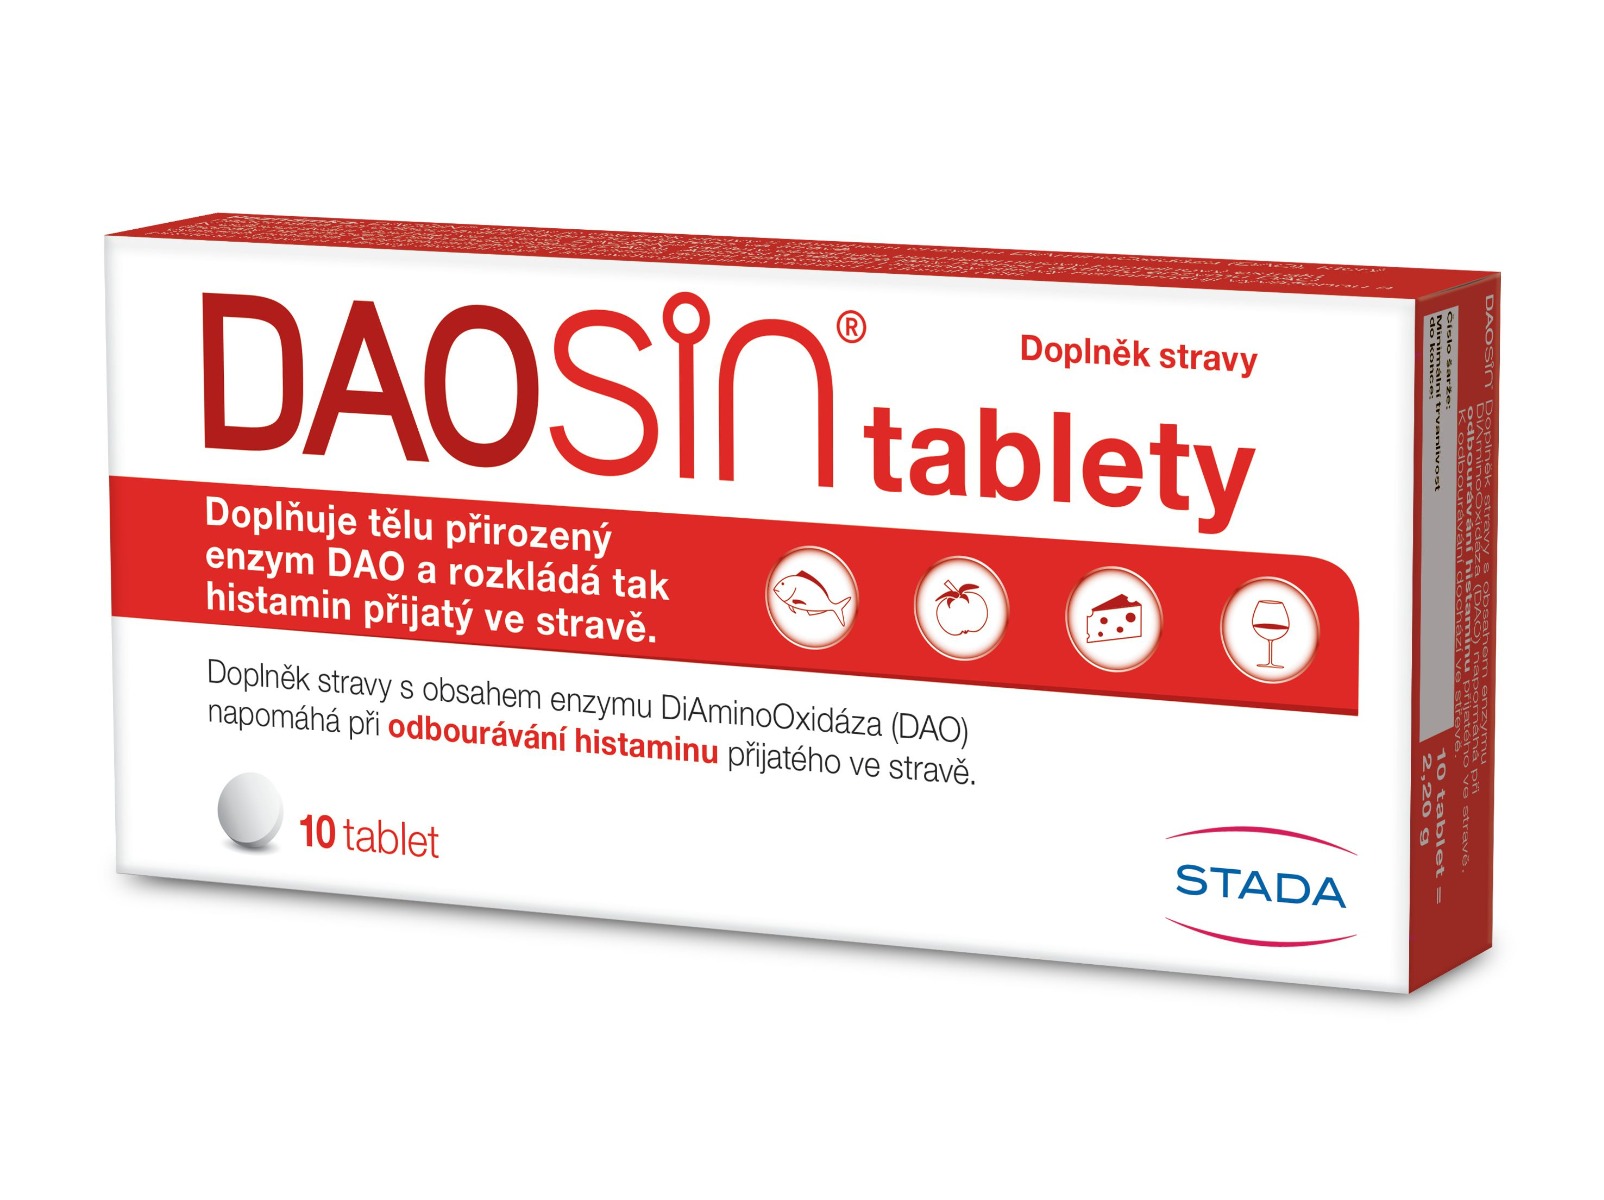 DAOSIN 10 tablet DAOSIN